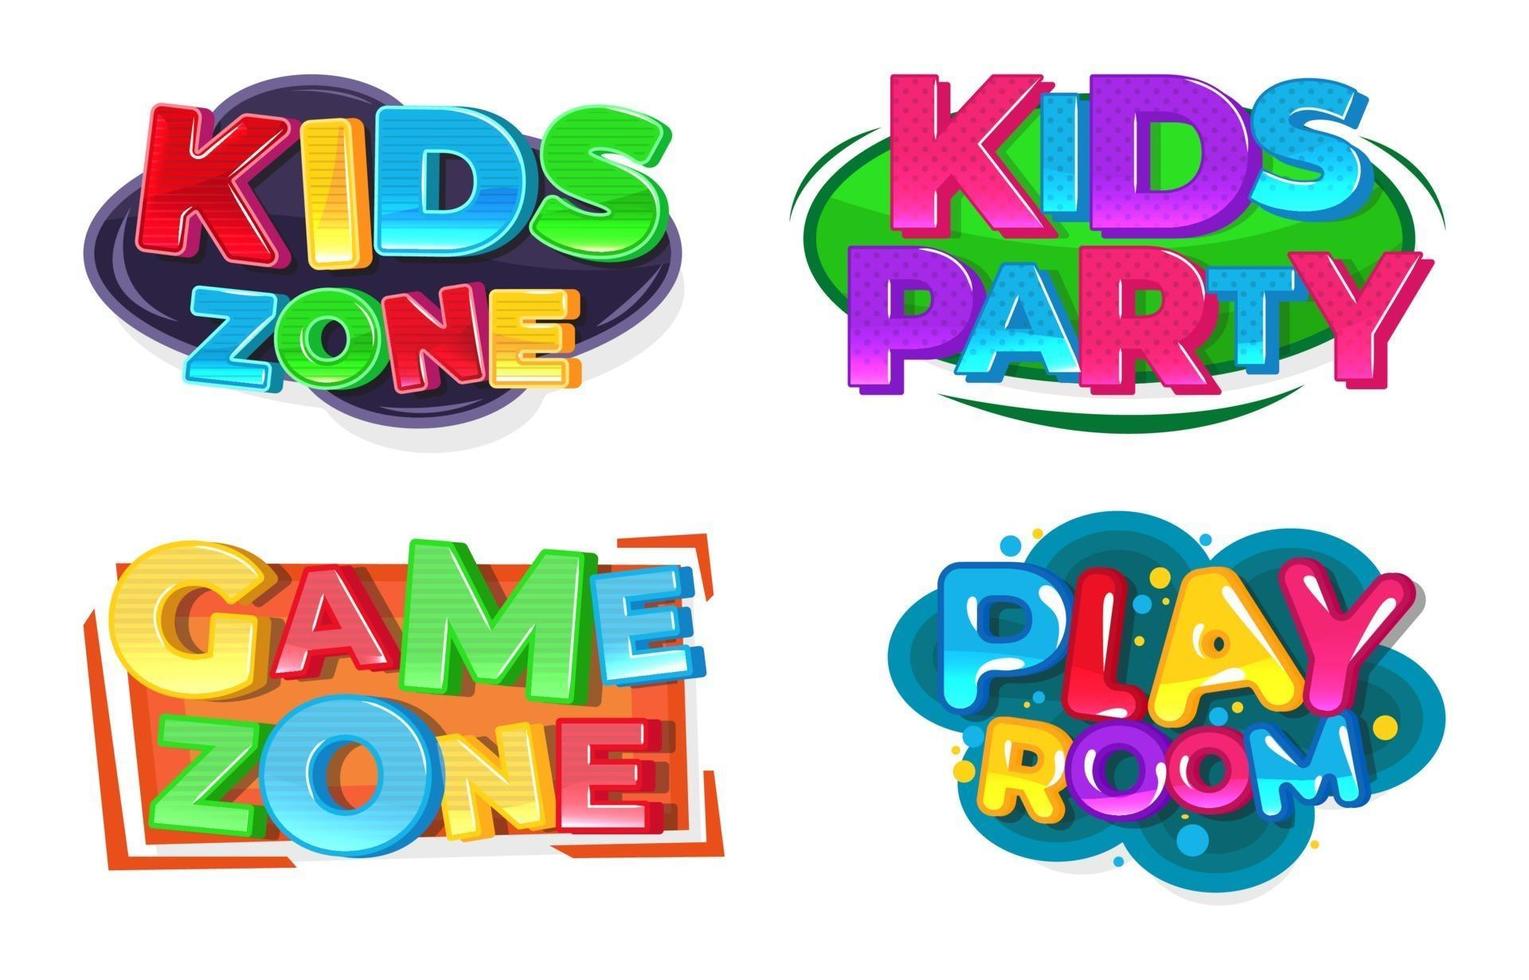 Kids zone party logo set vector